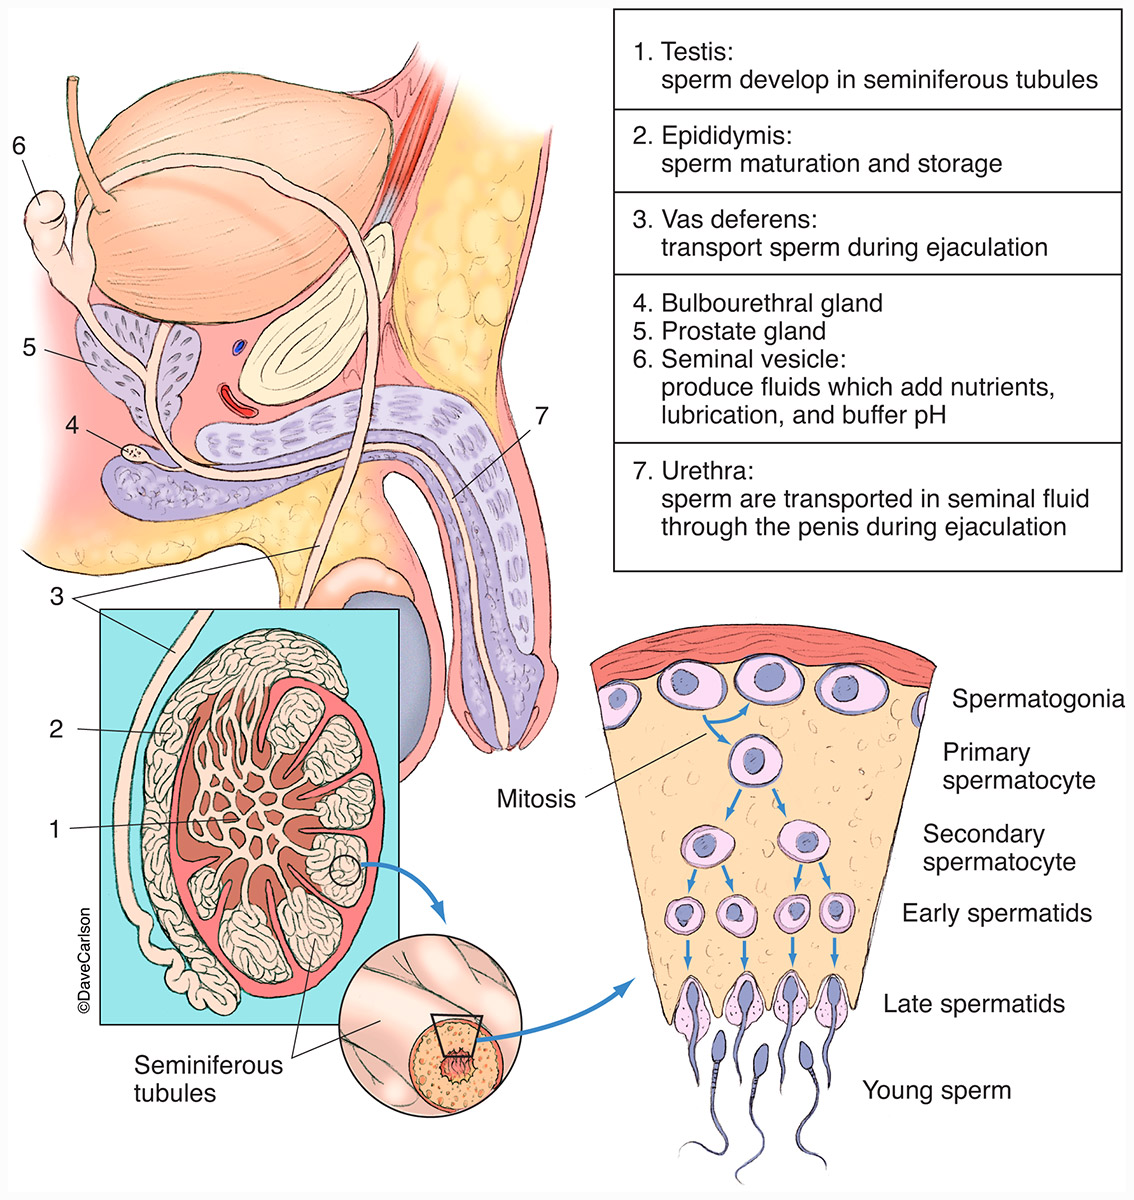 Illustration of sperm development, storage and ejaculation.